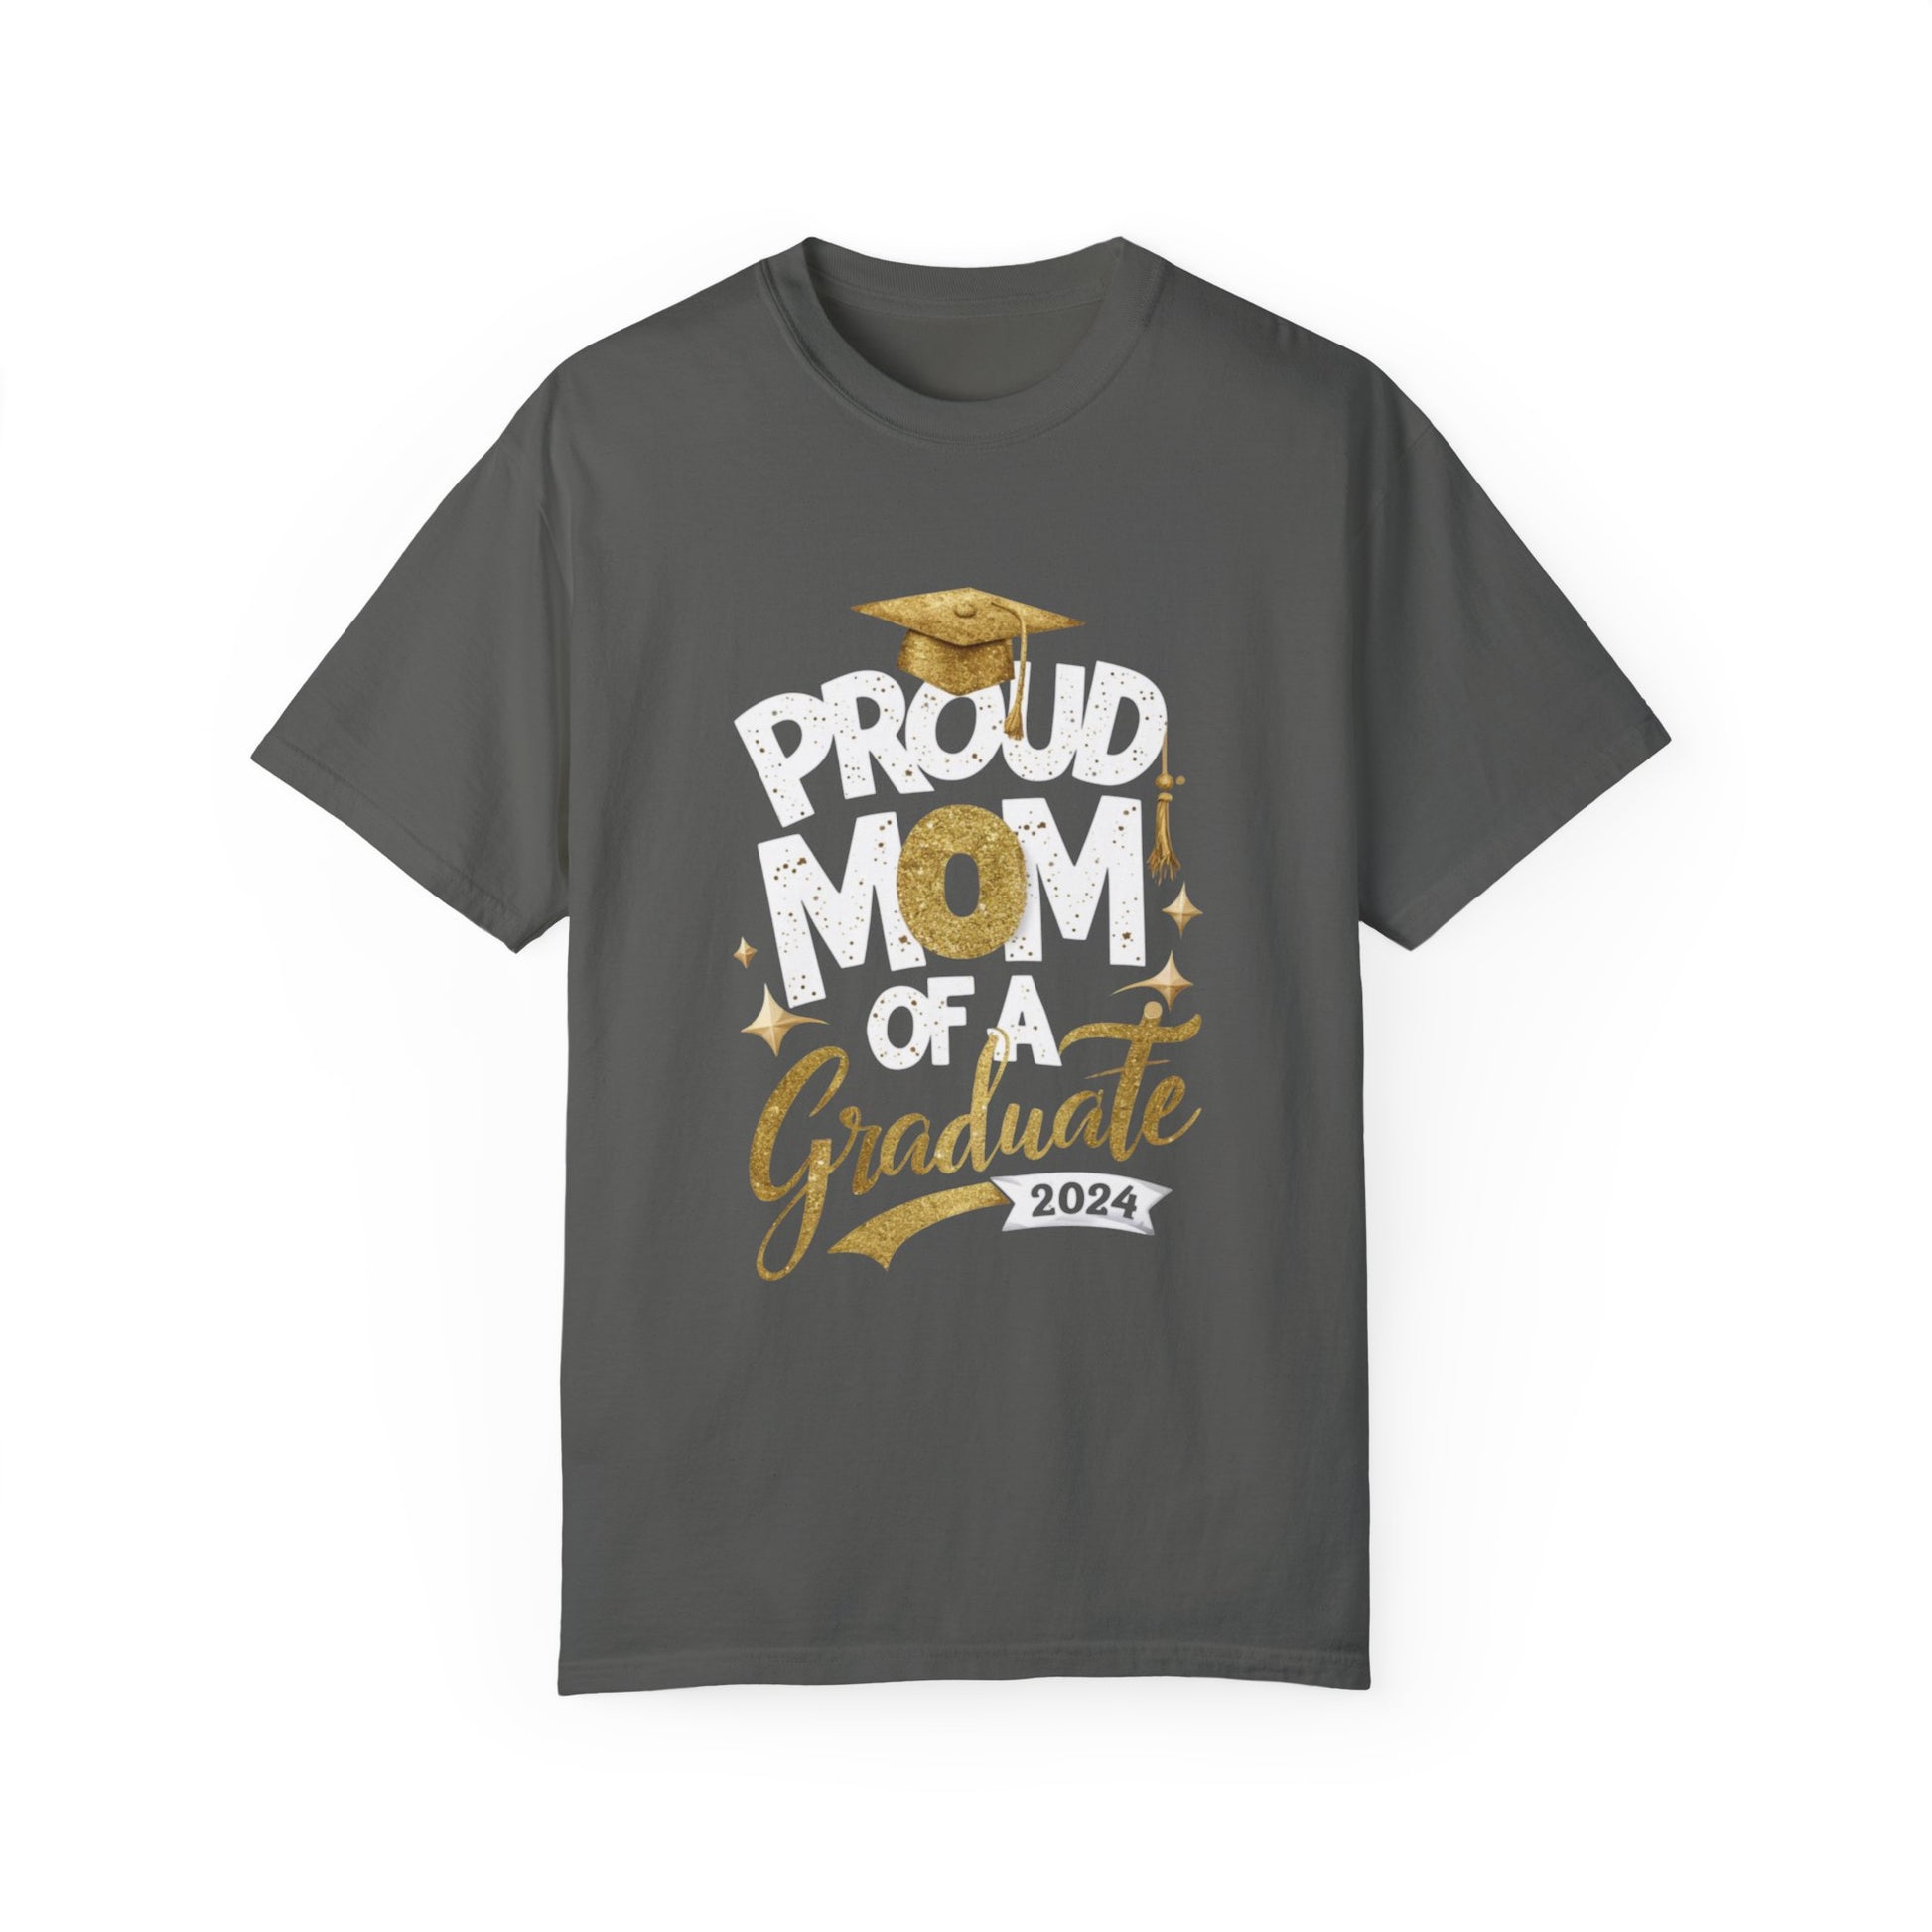 Proud Mom of a 2024 Graduate Unisex Garment-dyed T-shirt Cotton Funny Humorous Graphic Soft Premium Unisex Men Women Pepper T-shirt Birthday Gift-12